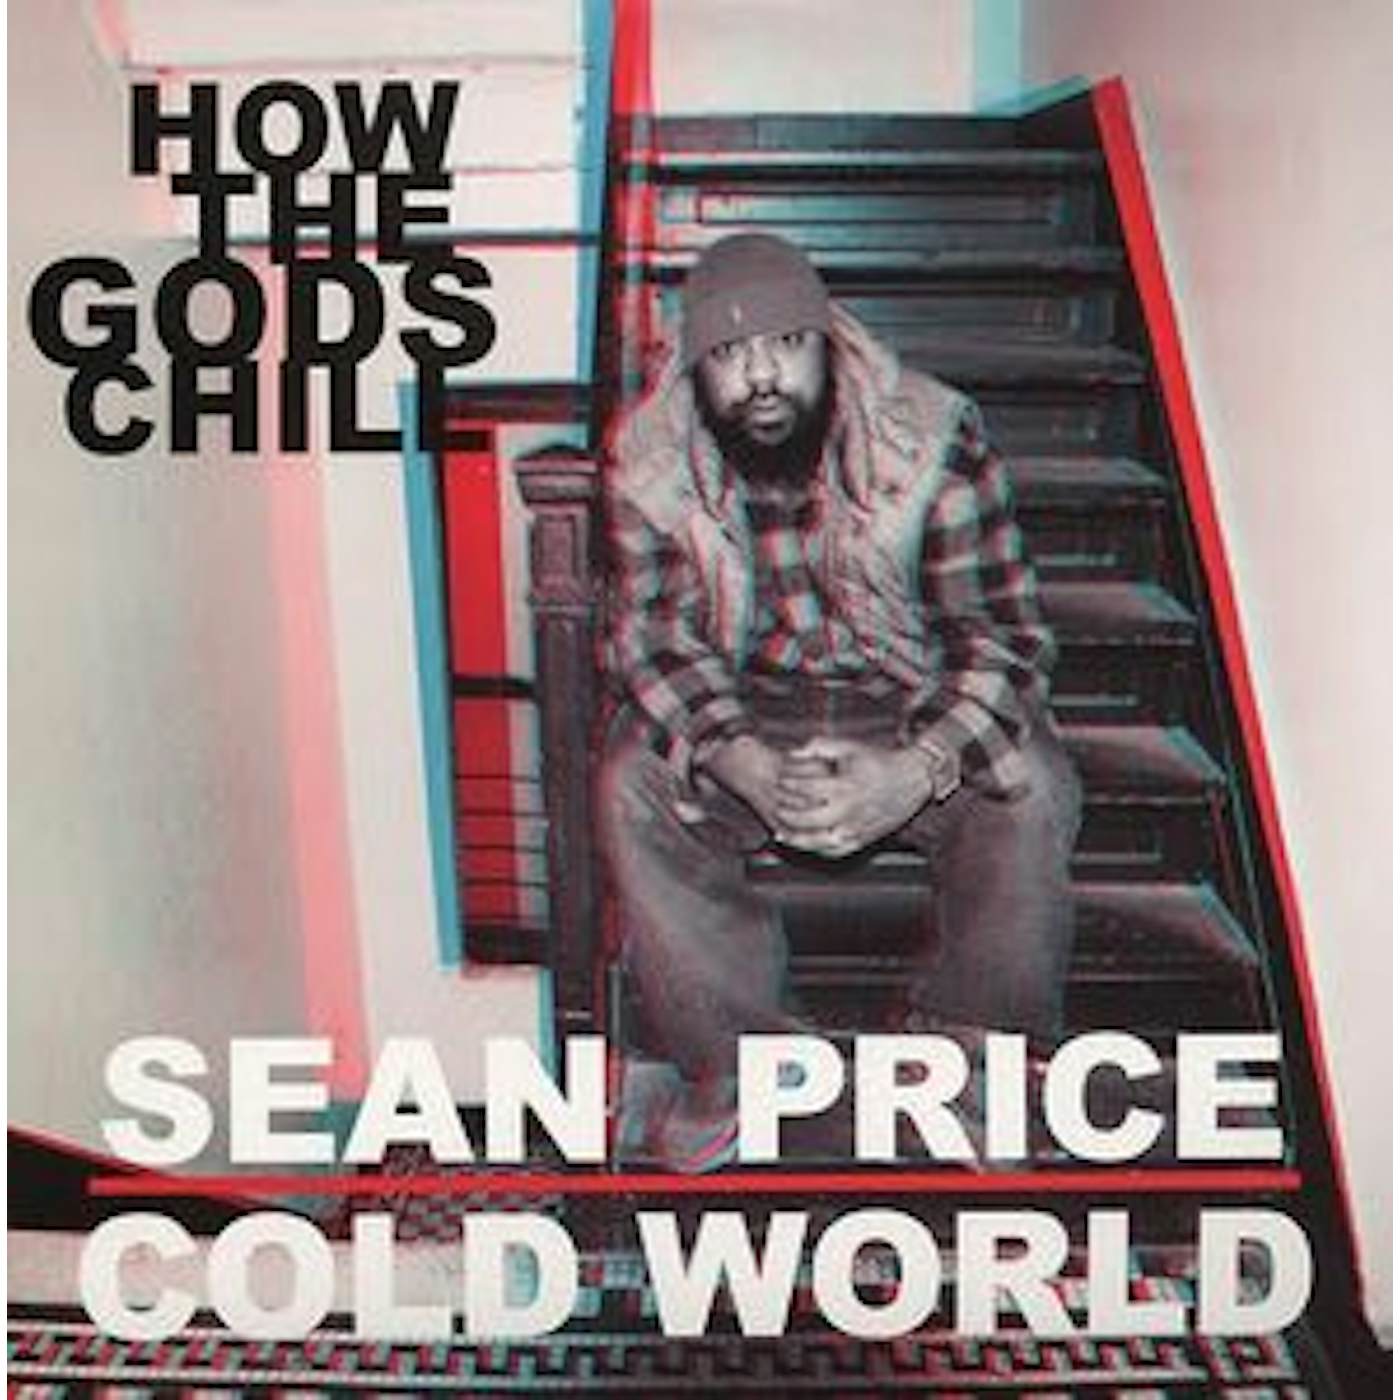 Sean Price COLD WORLD-HOW THE GODS CHILL Vinyl Record